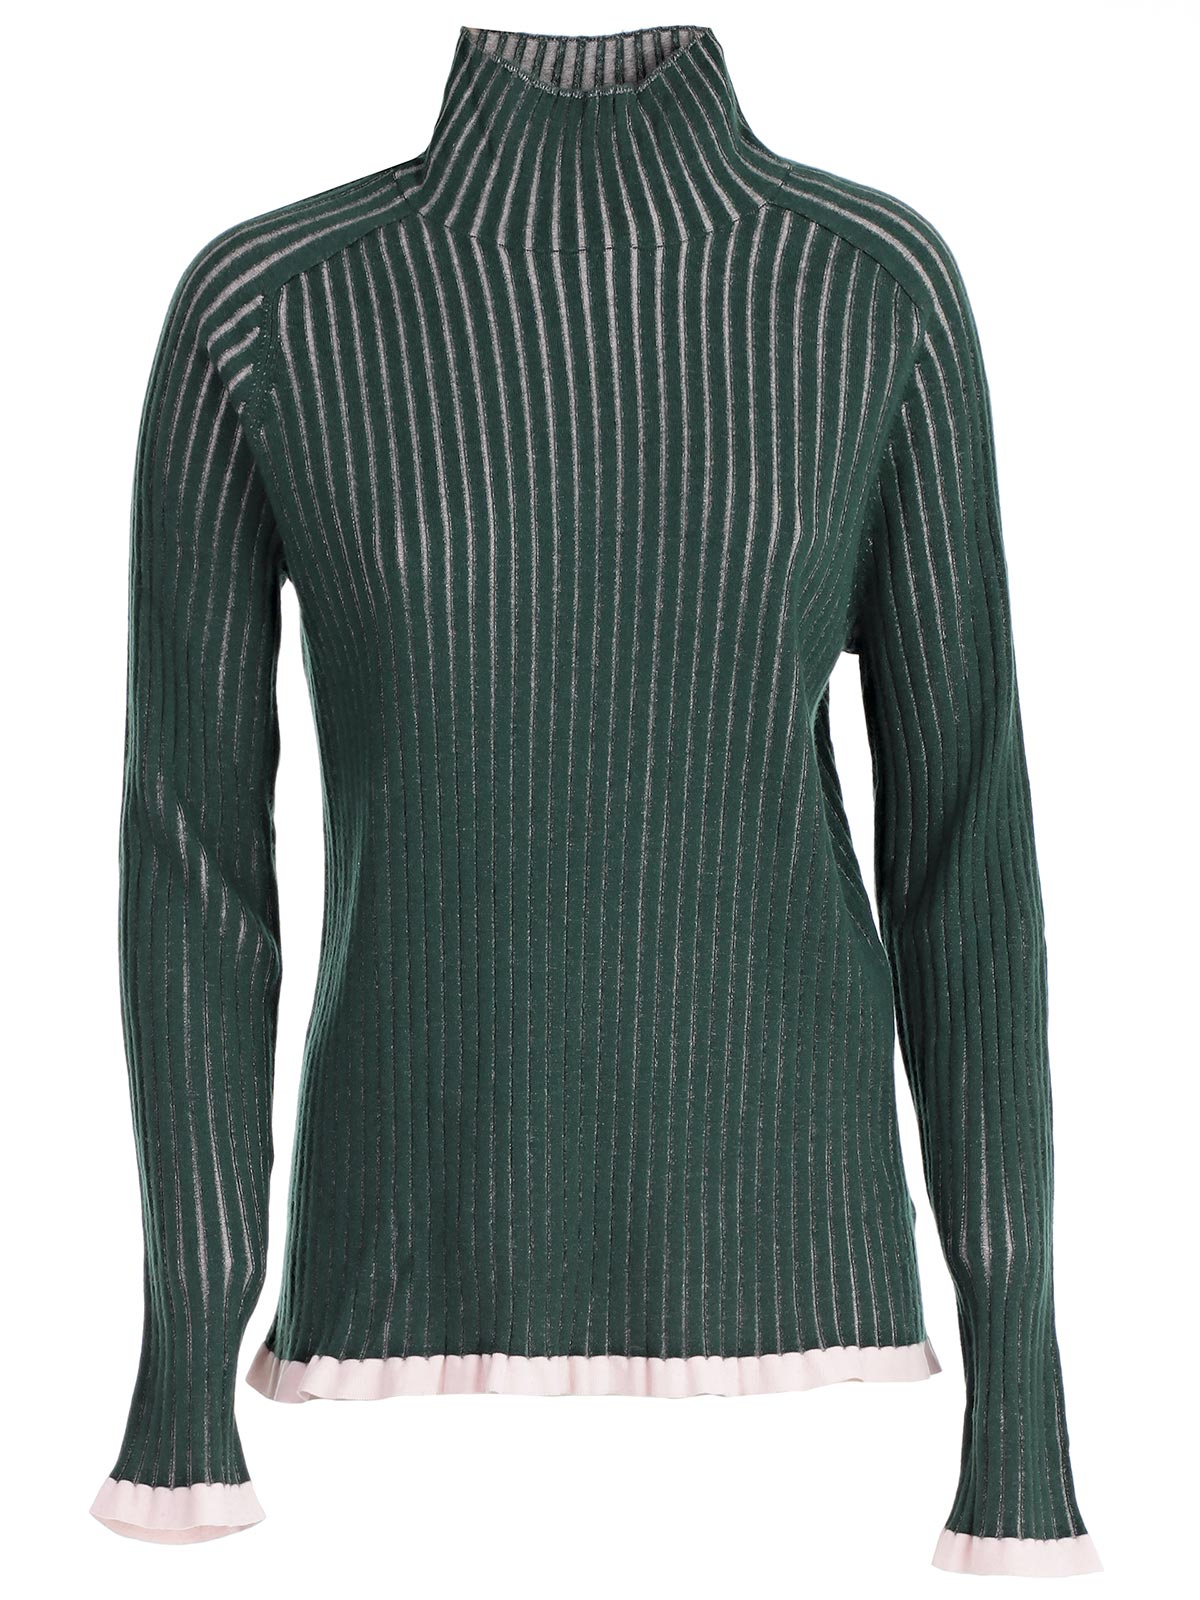 burberry sweater green